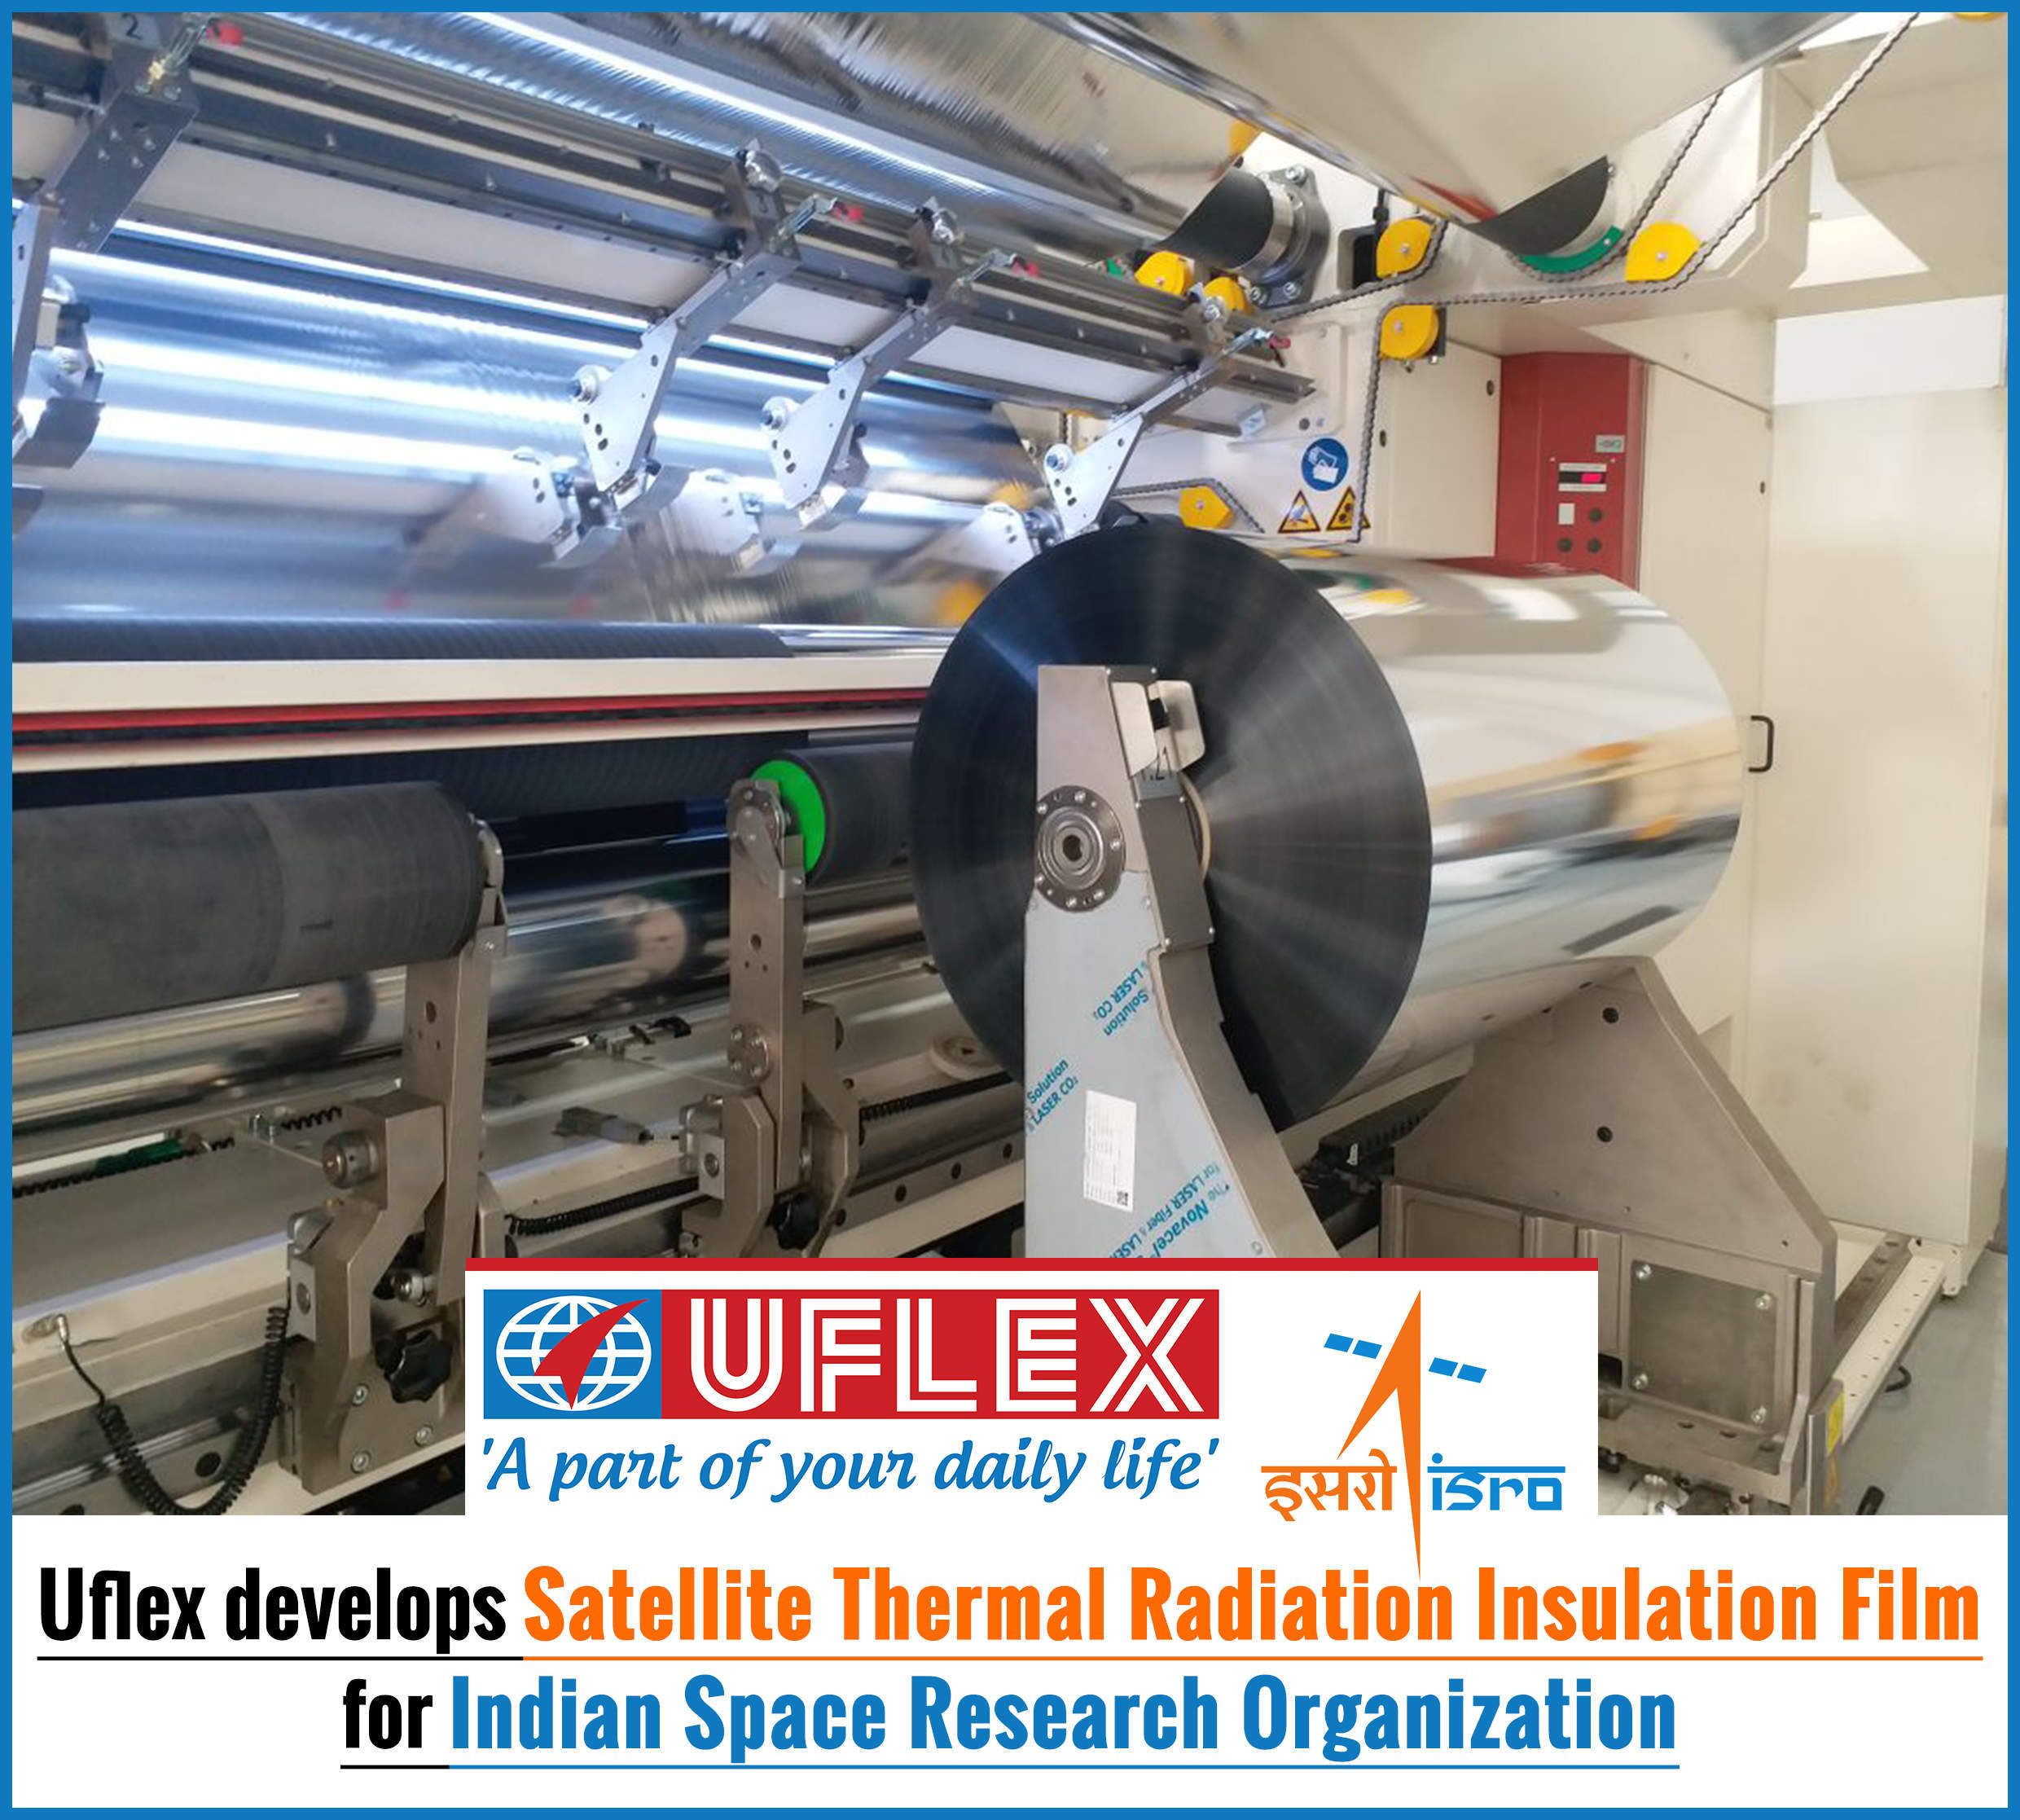 Uflex develops Satellite Thermal Radiation Insulation Film for Indian Space Research Organization